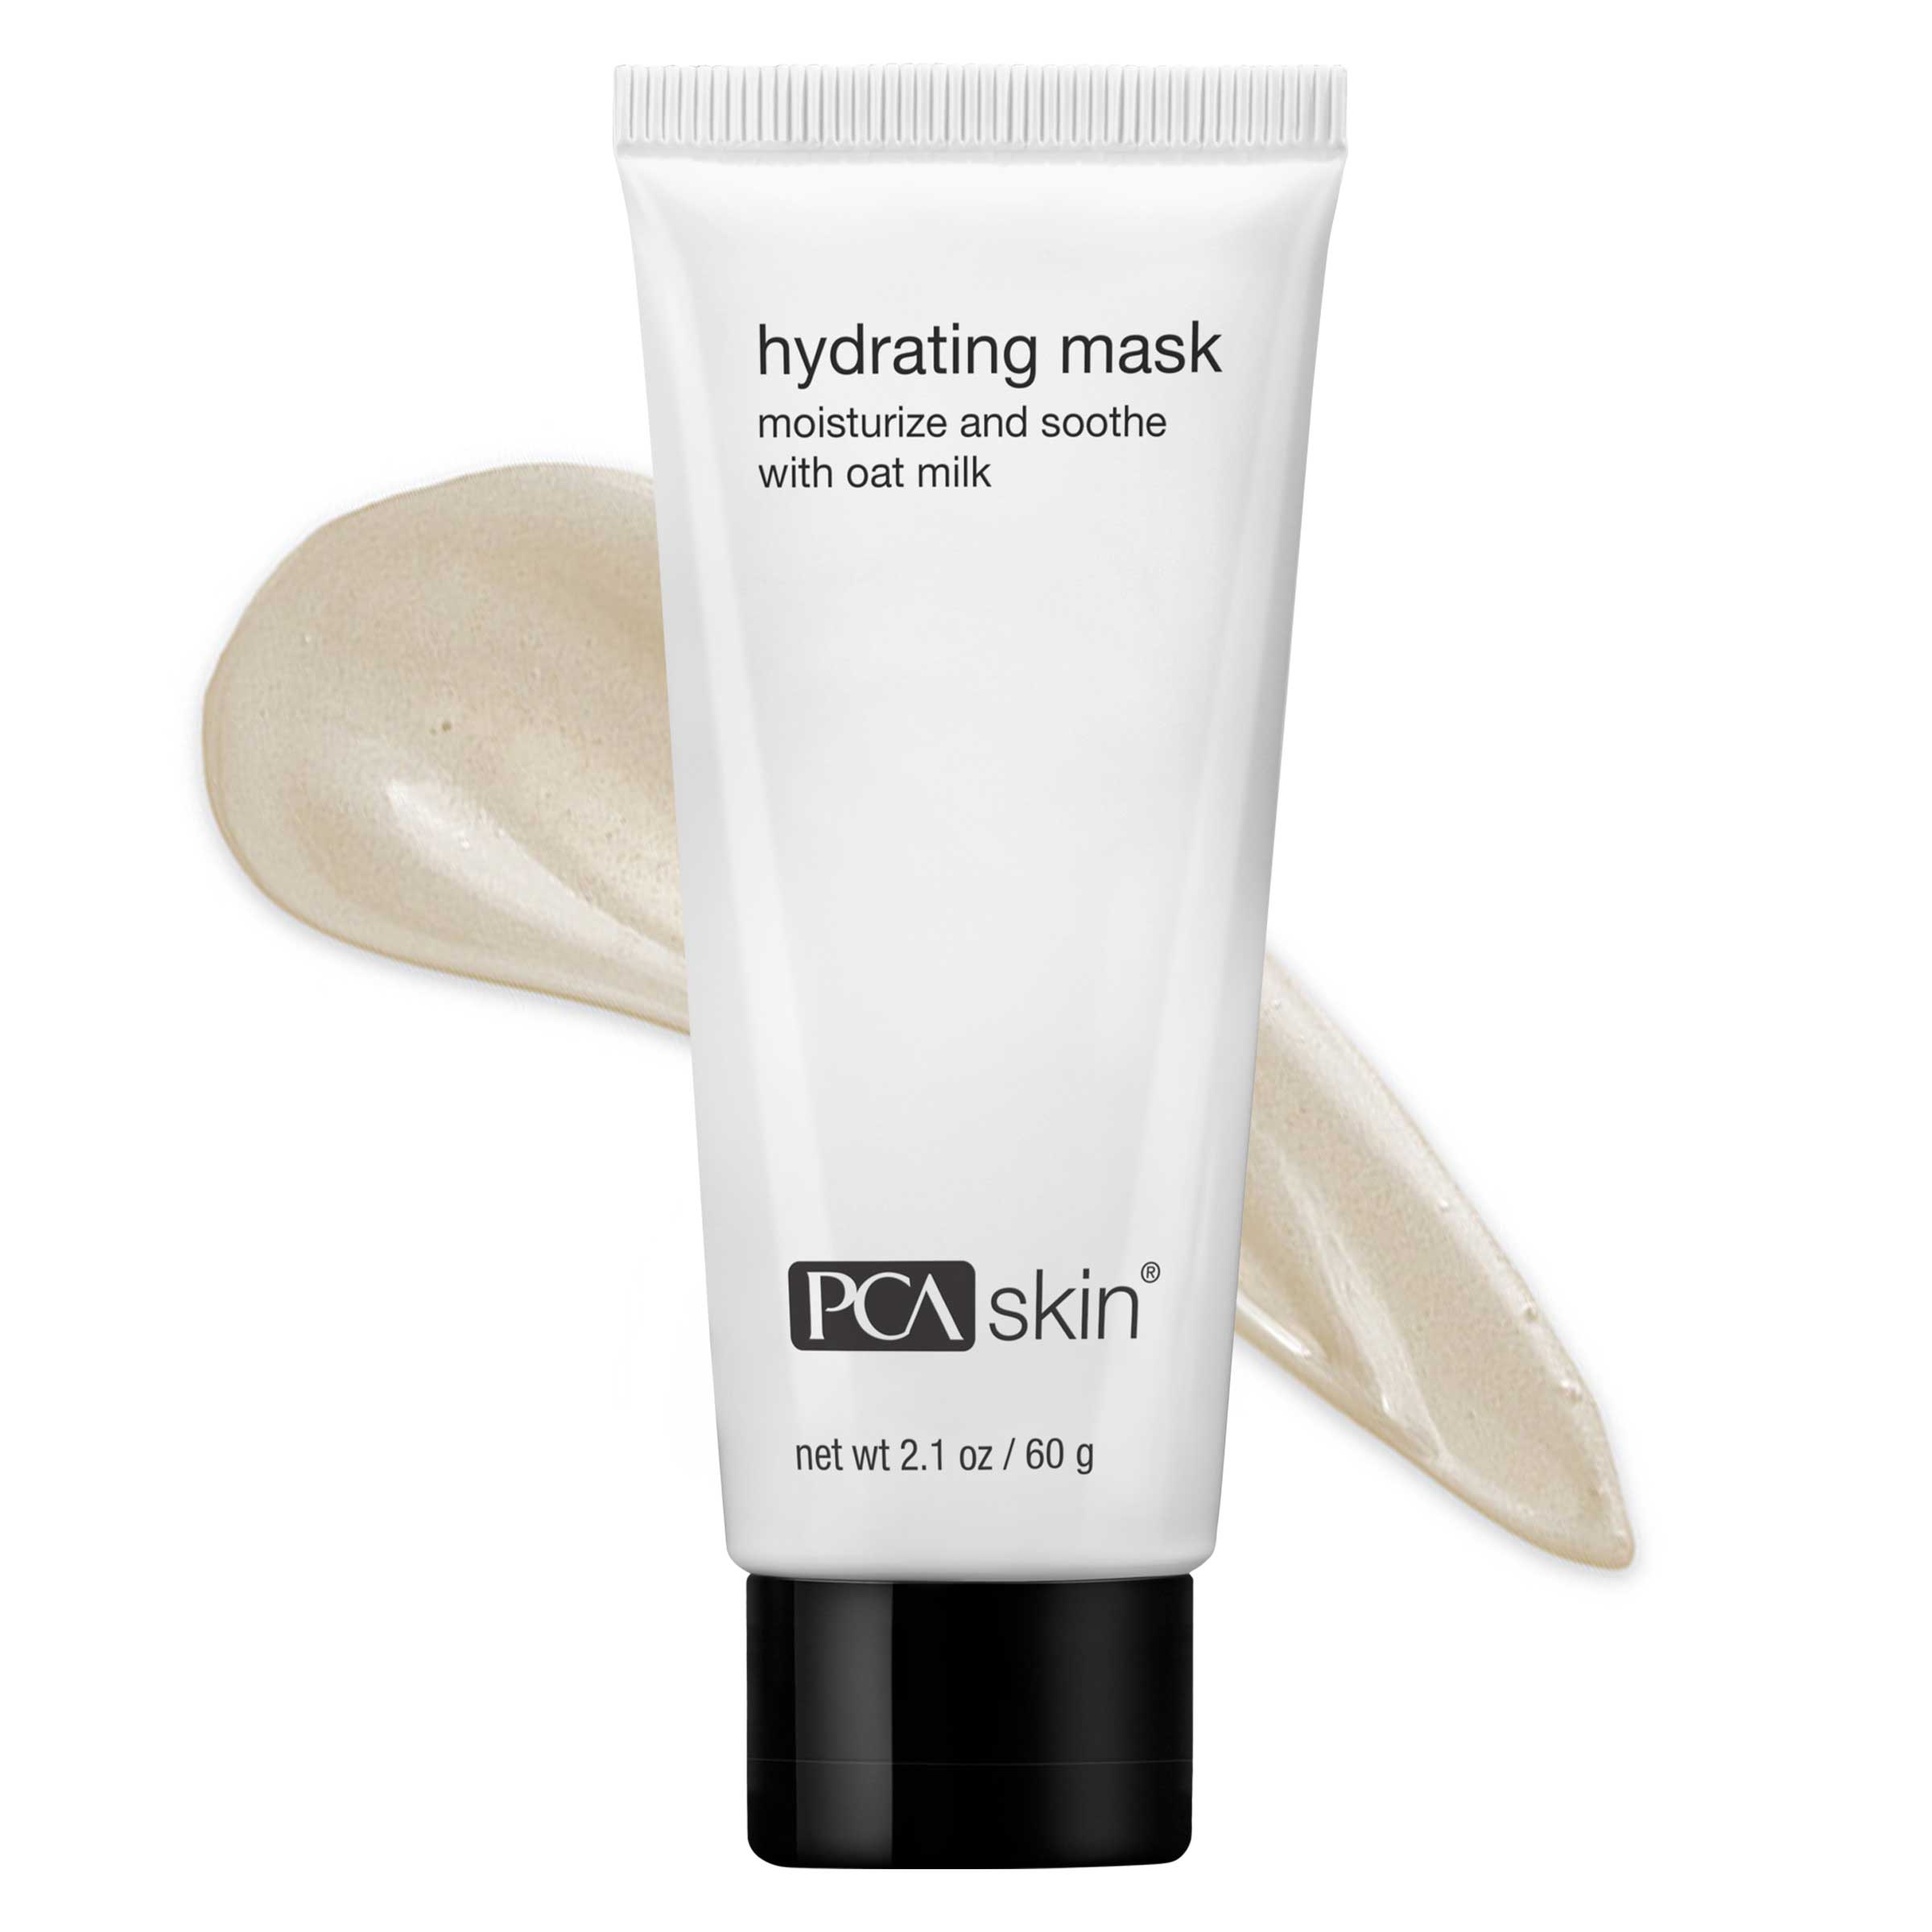 PCA Skin Hydrating Mask (2.1 oz)